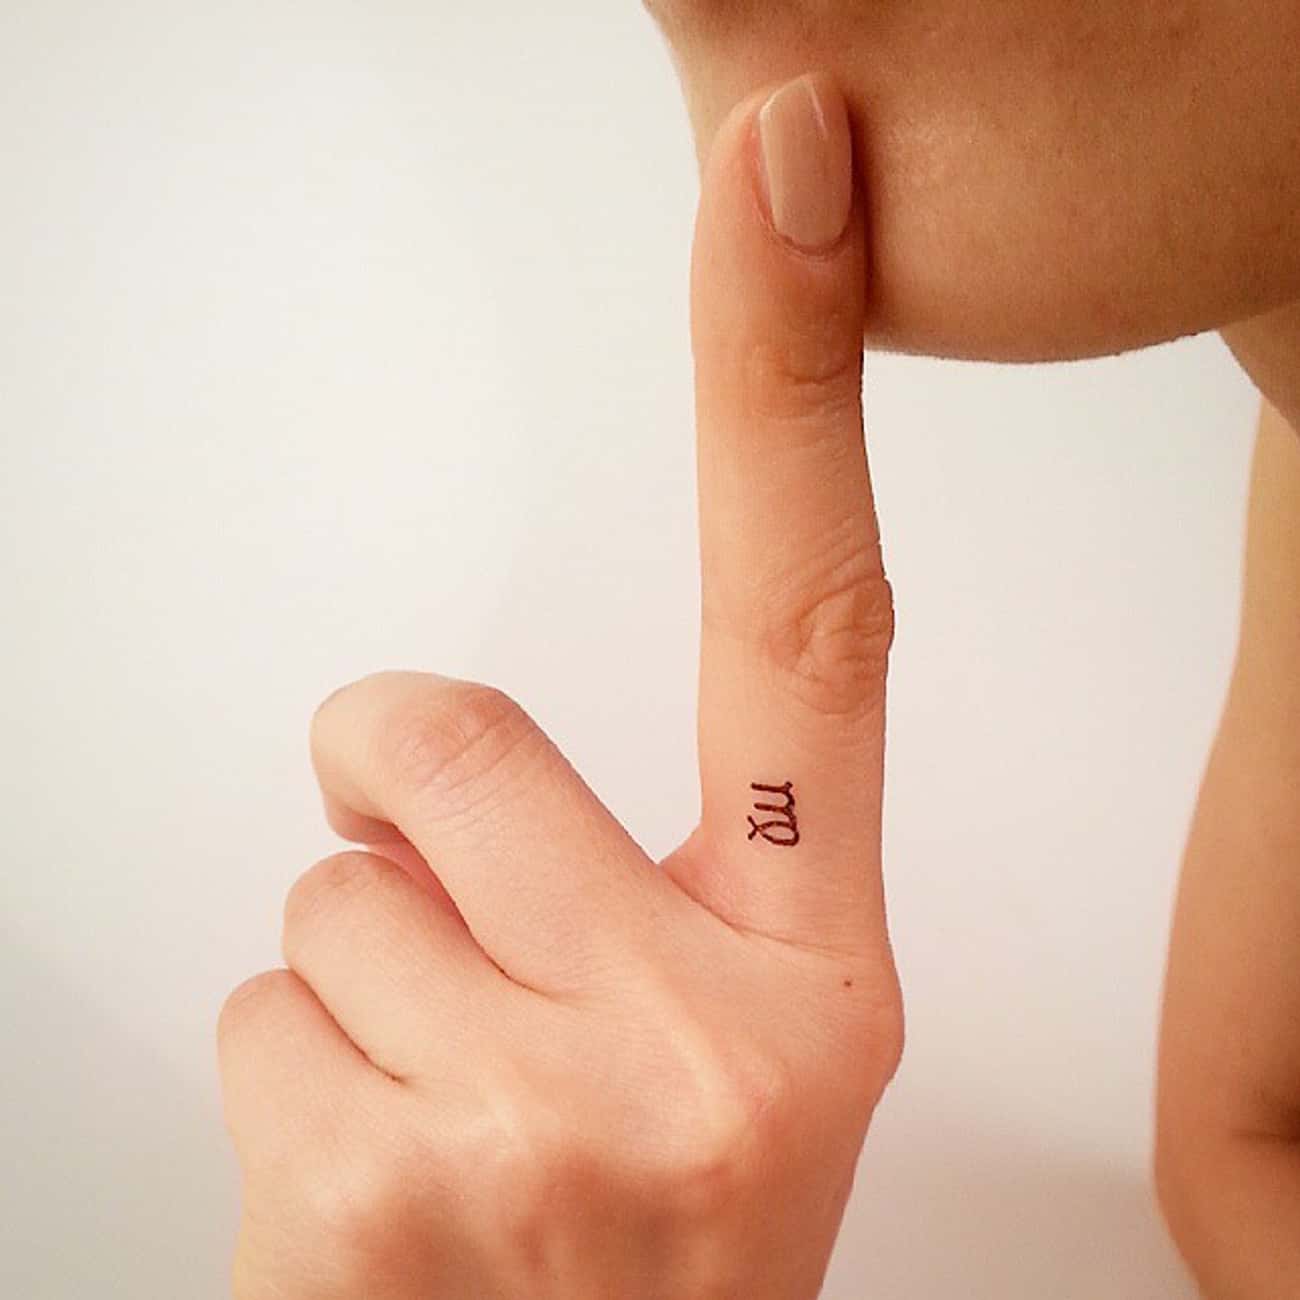 Tiny Symbol on a Finger